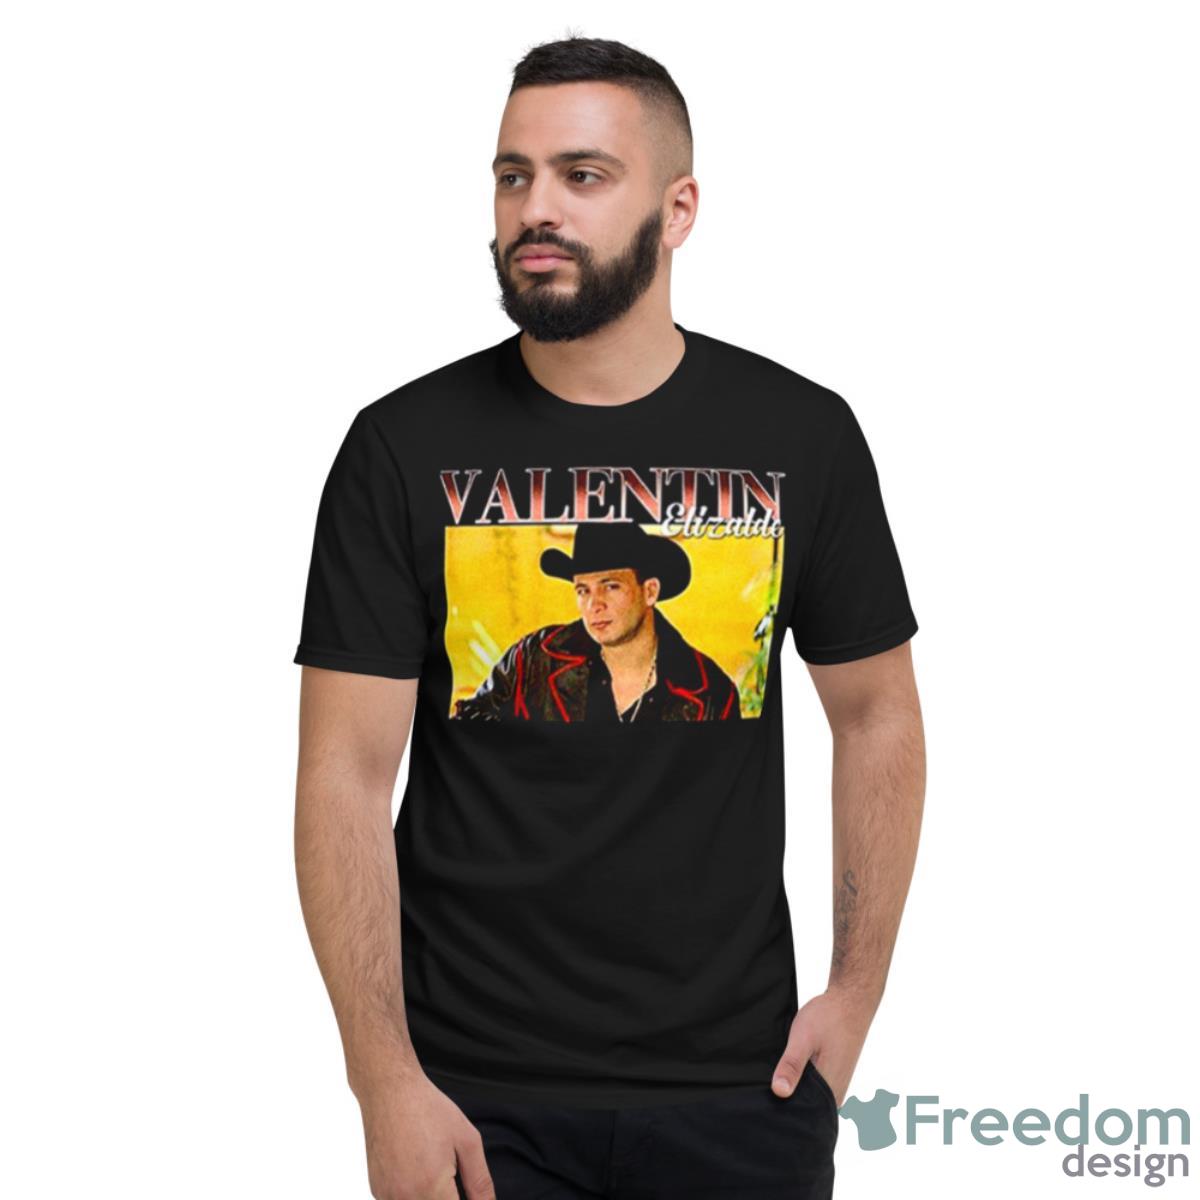 Valentin Elizalde Portrait Shirt - Freedomdesign